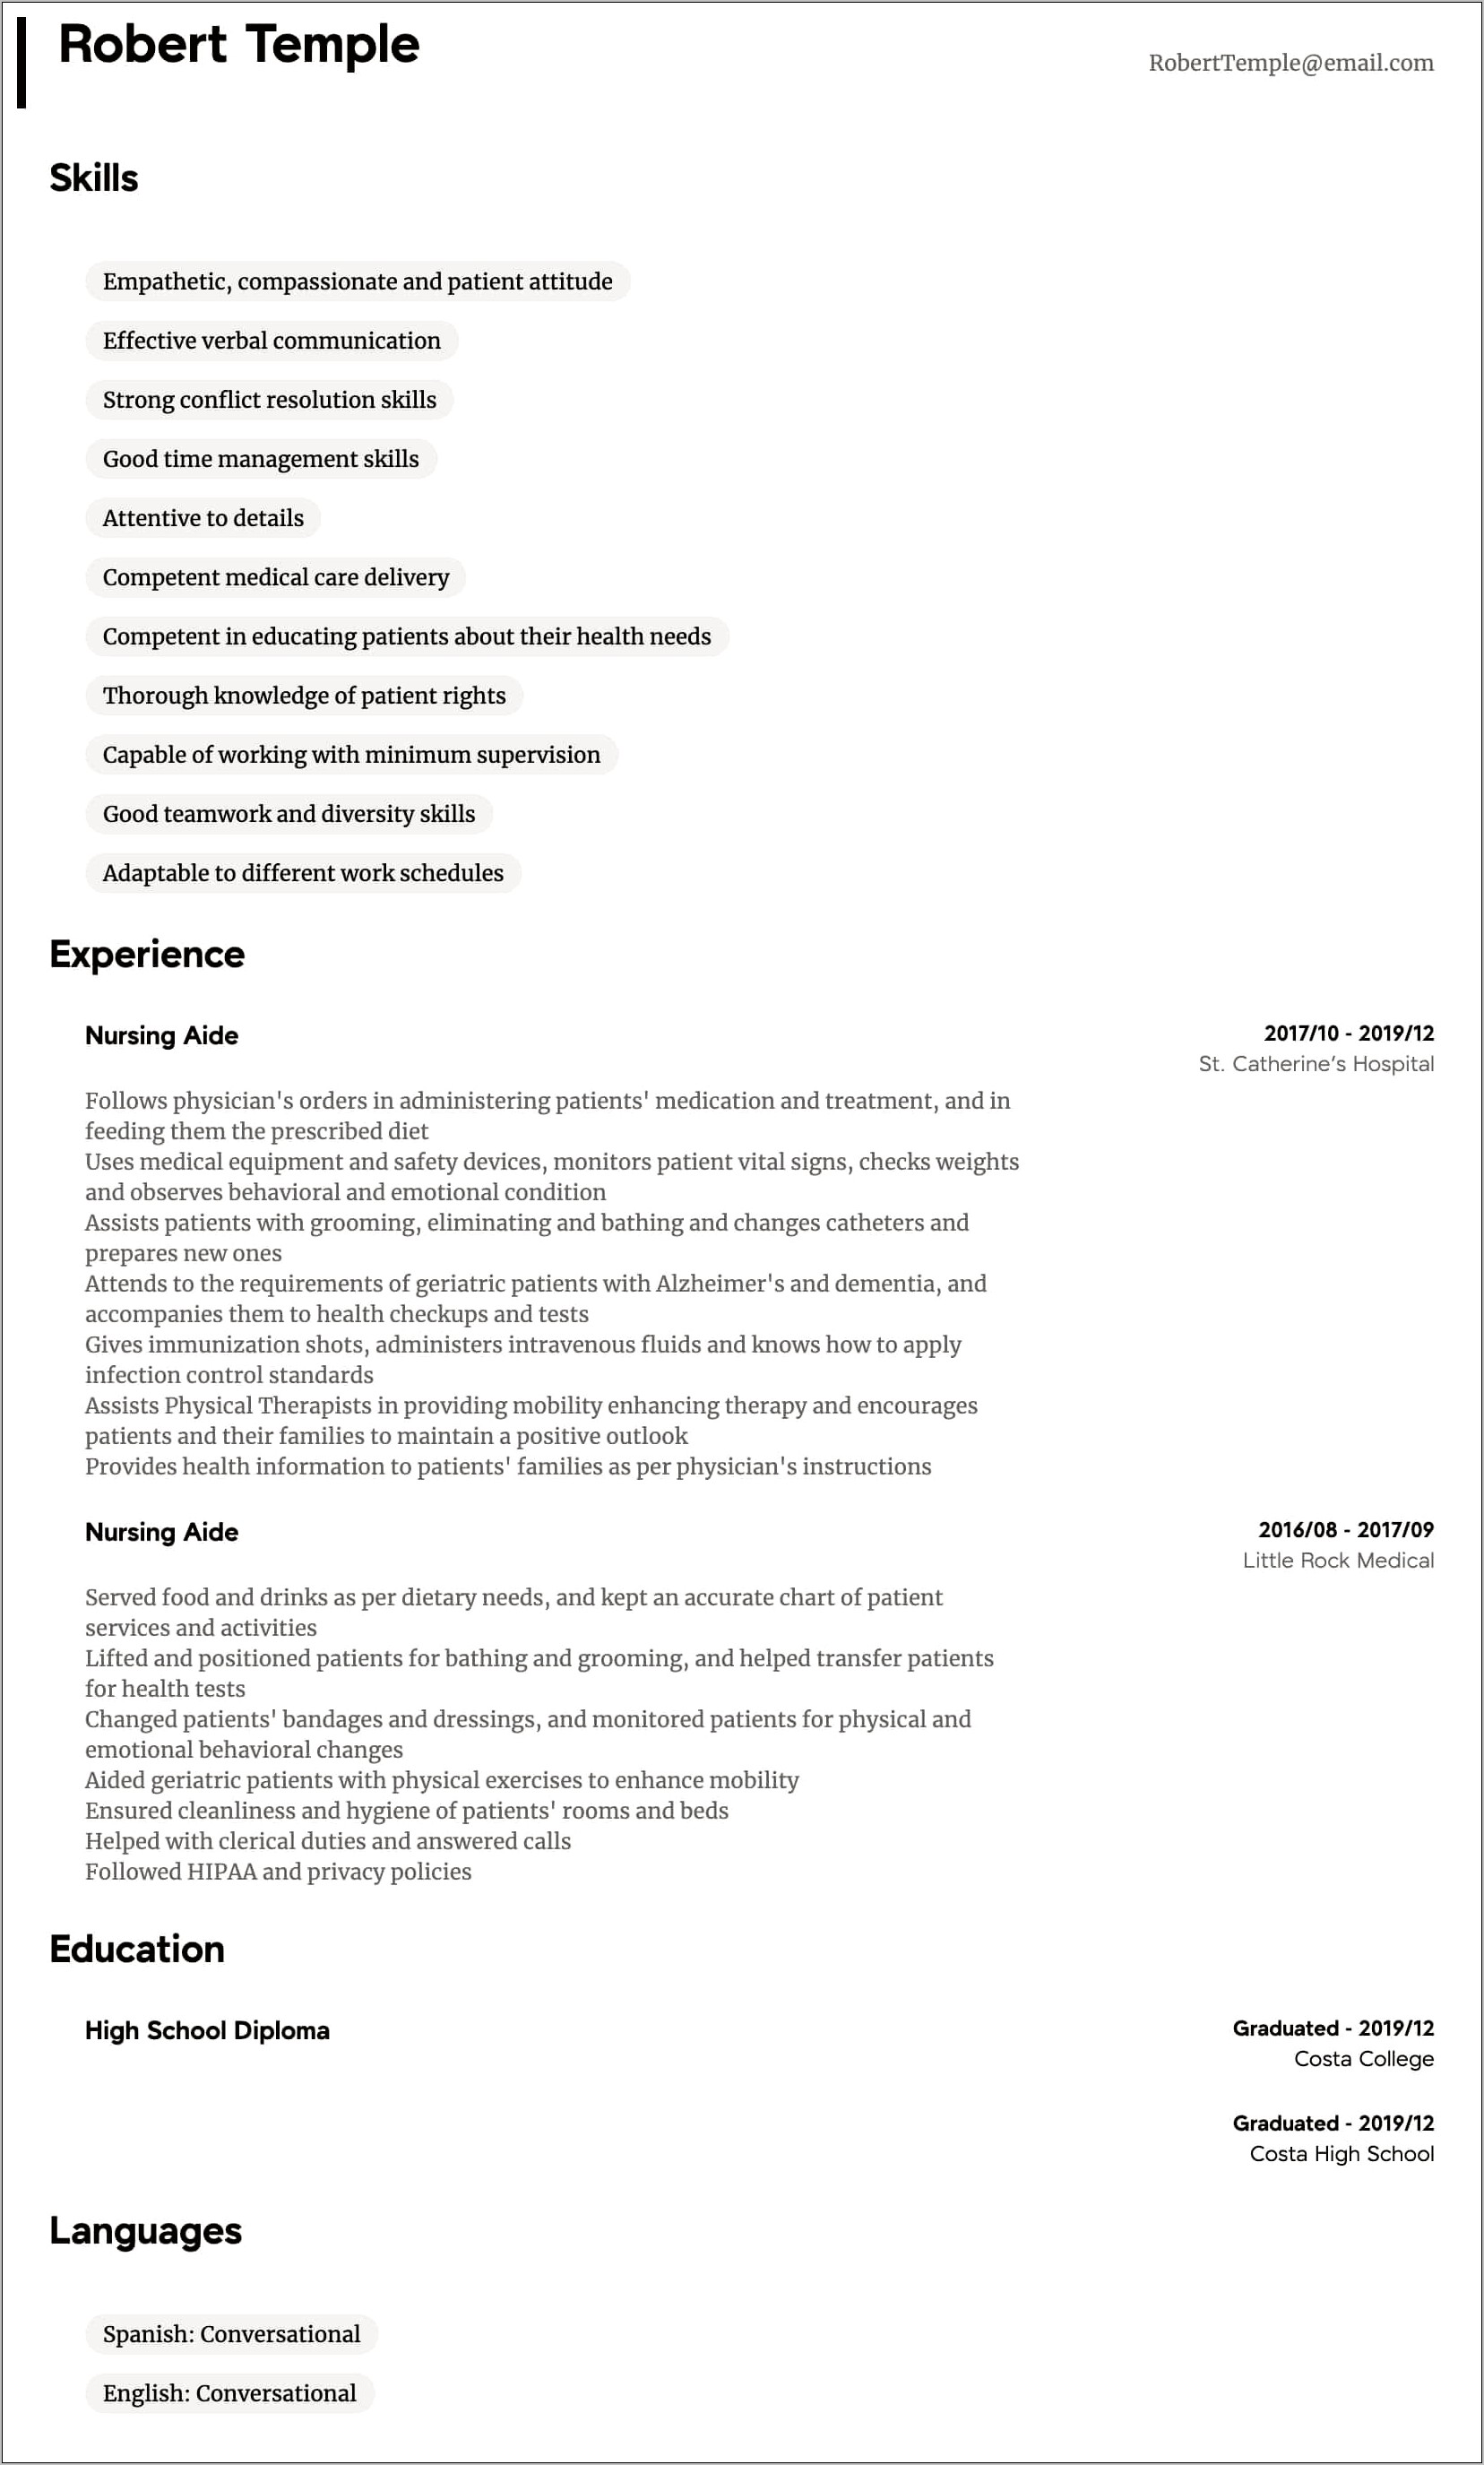 Job Description For Dietary Aide For Resume